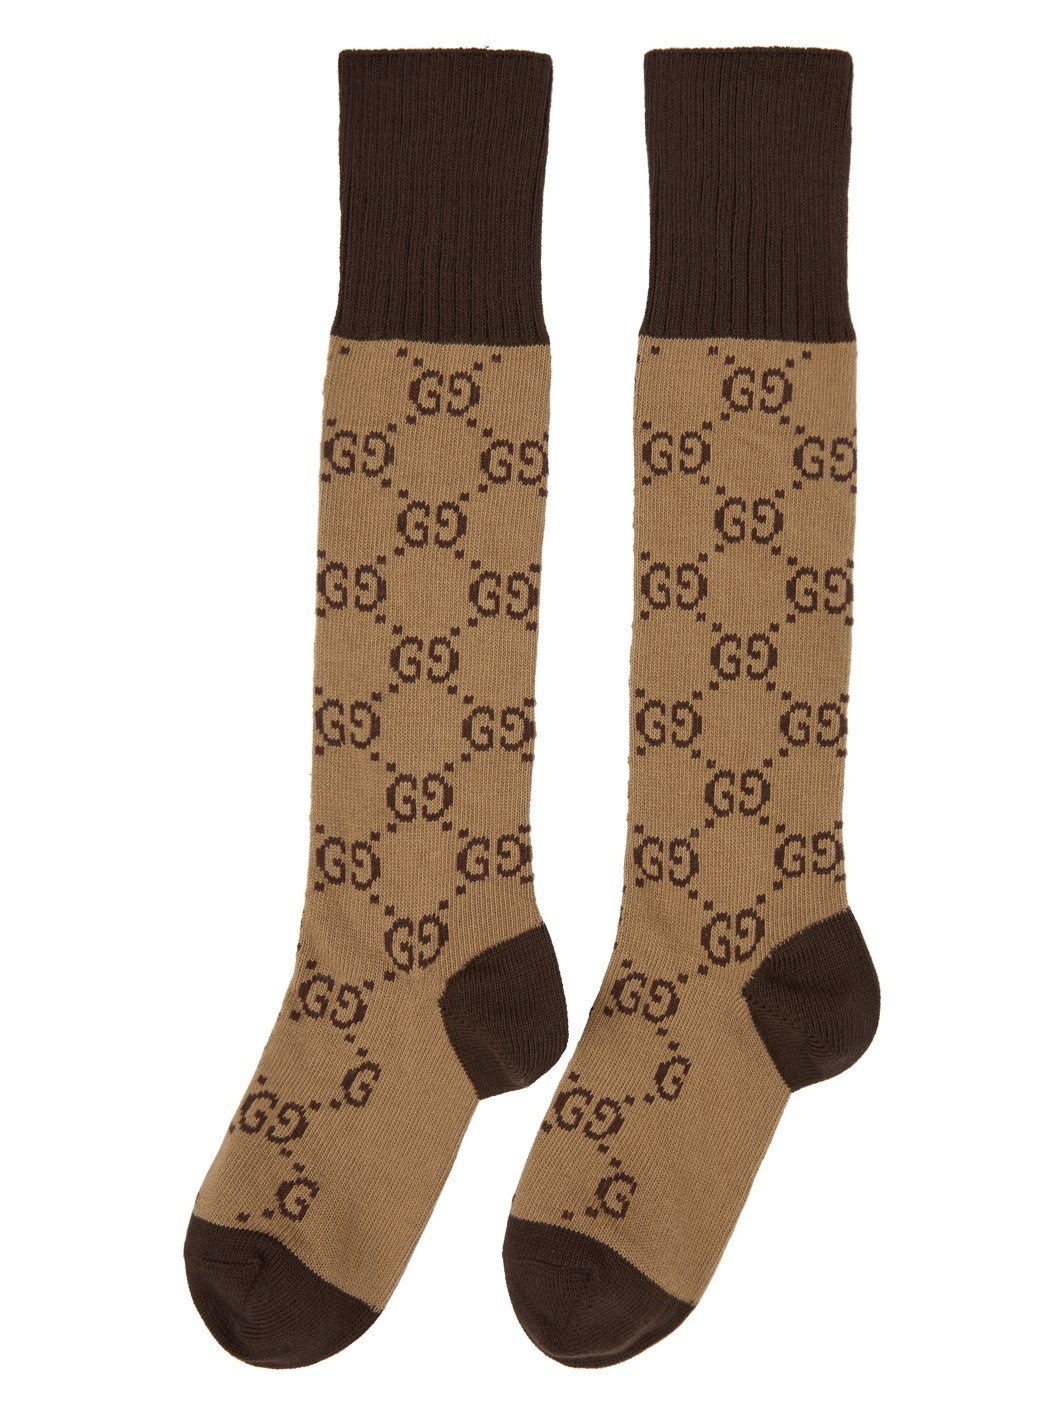 Beige & Brown GG Print Socks - 2